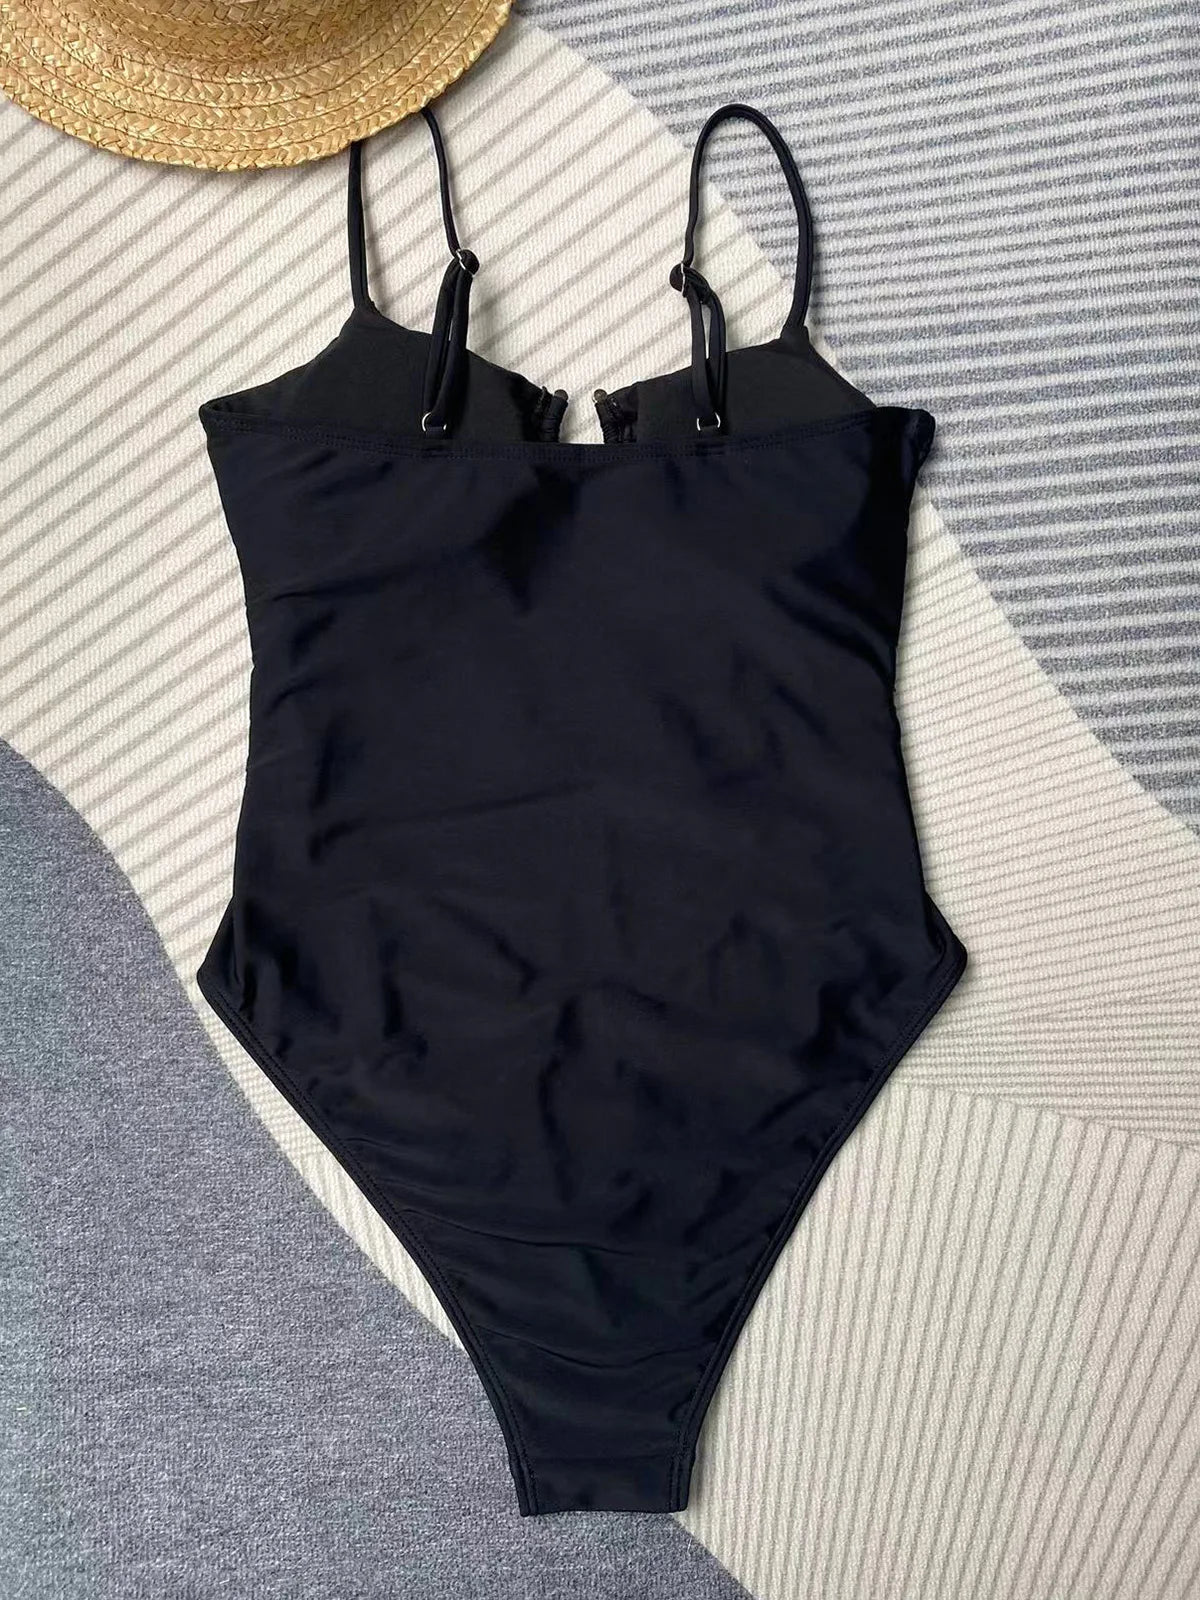 Metallic Loop Swimsuit Cutout Padded Bathing Suit